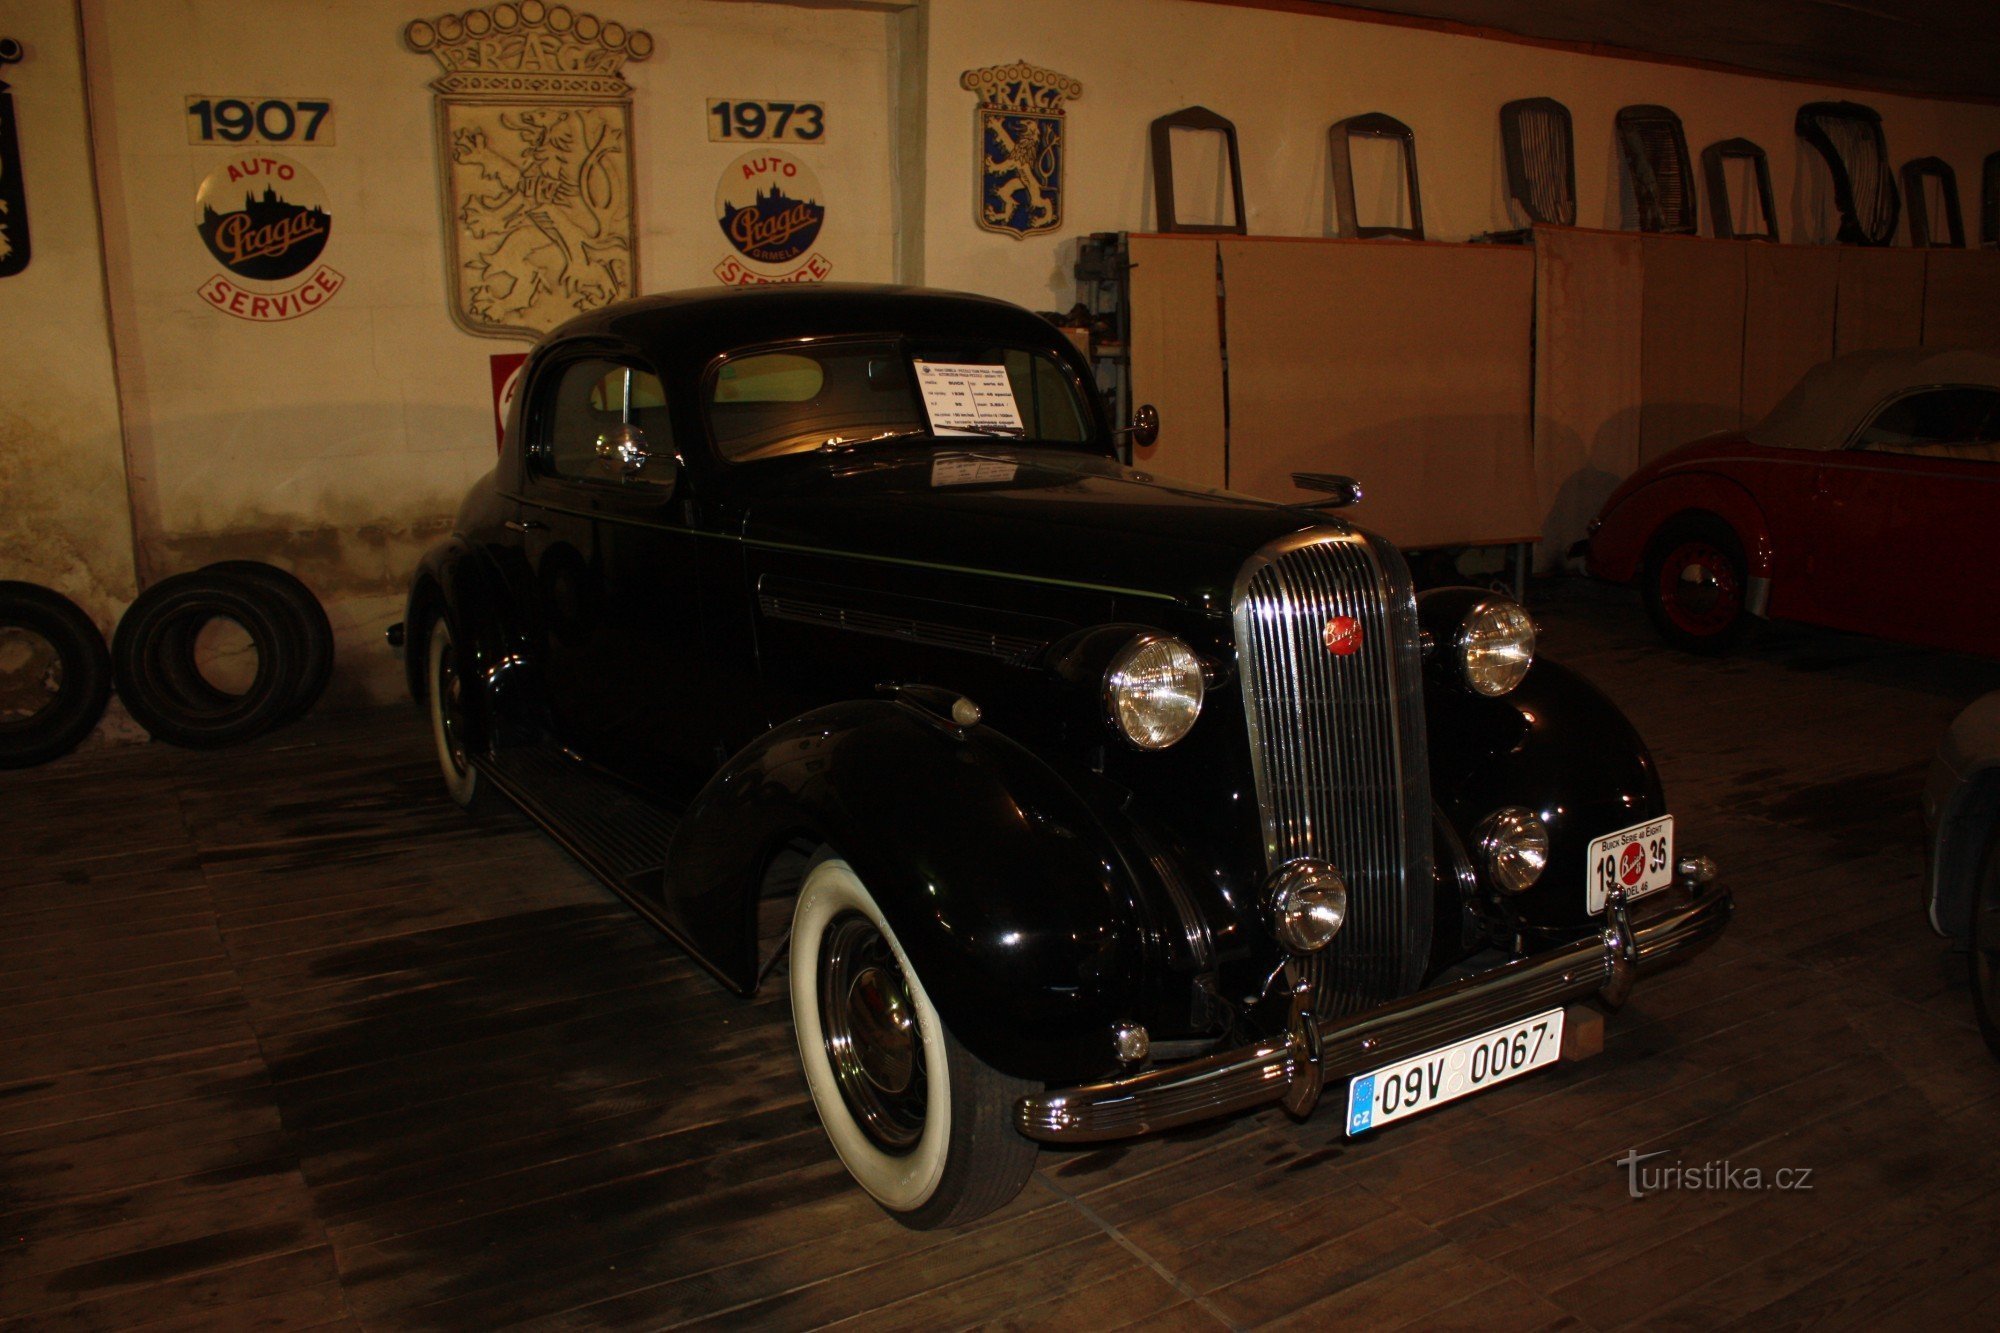 En amerikansk Buick fra 1936 er i samlingen til sammenligning